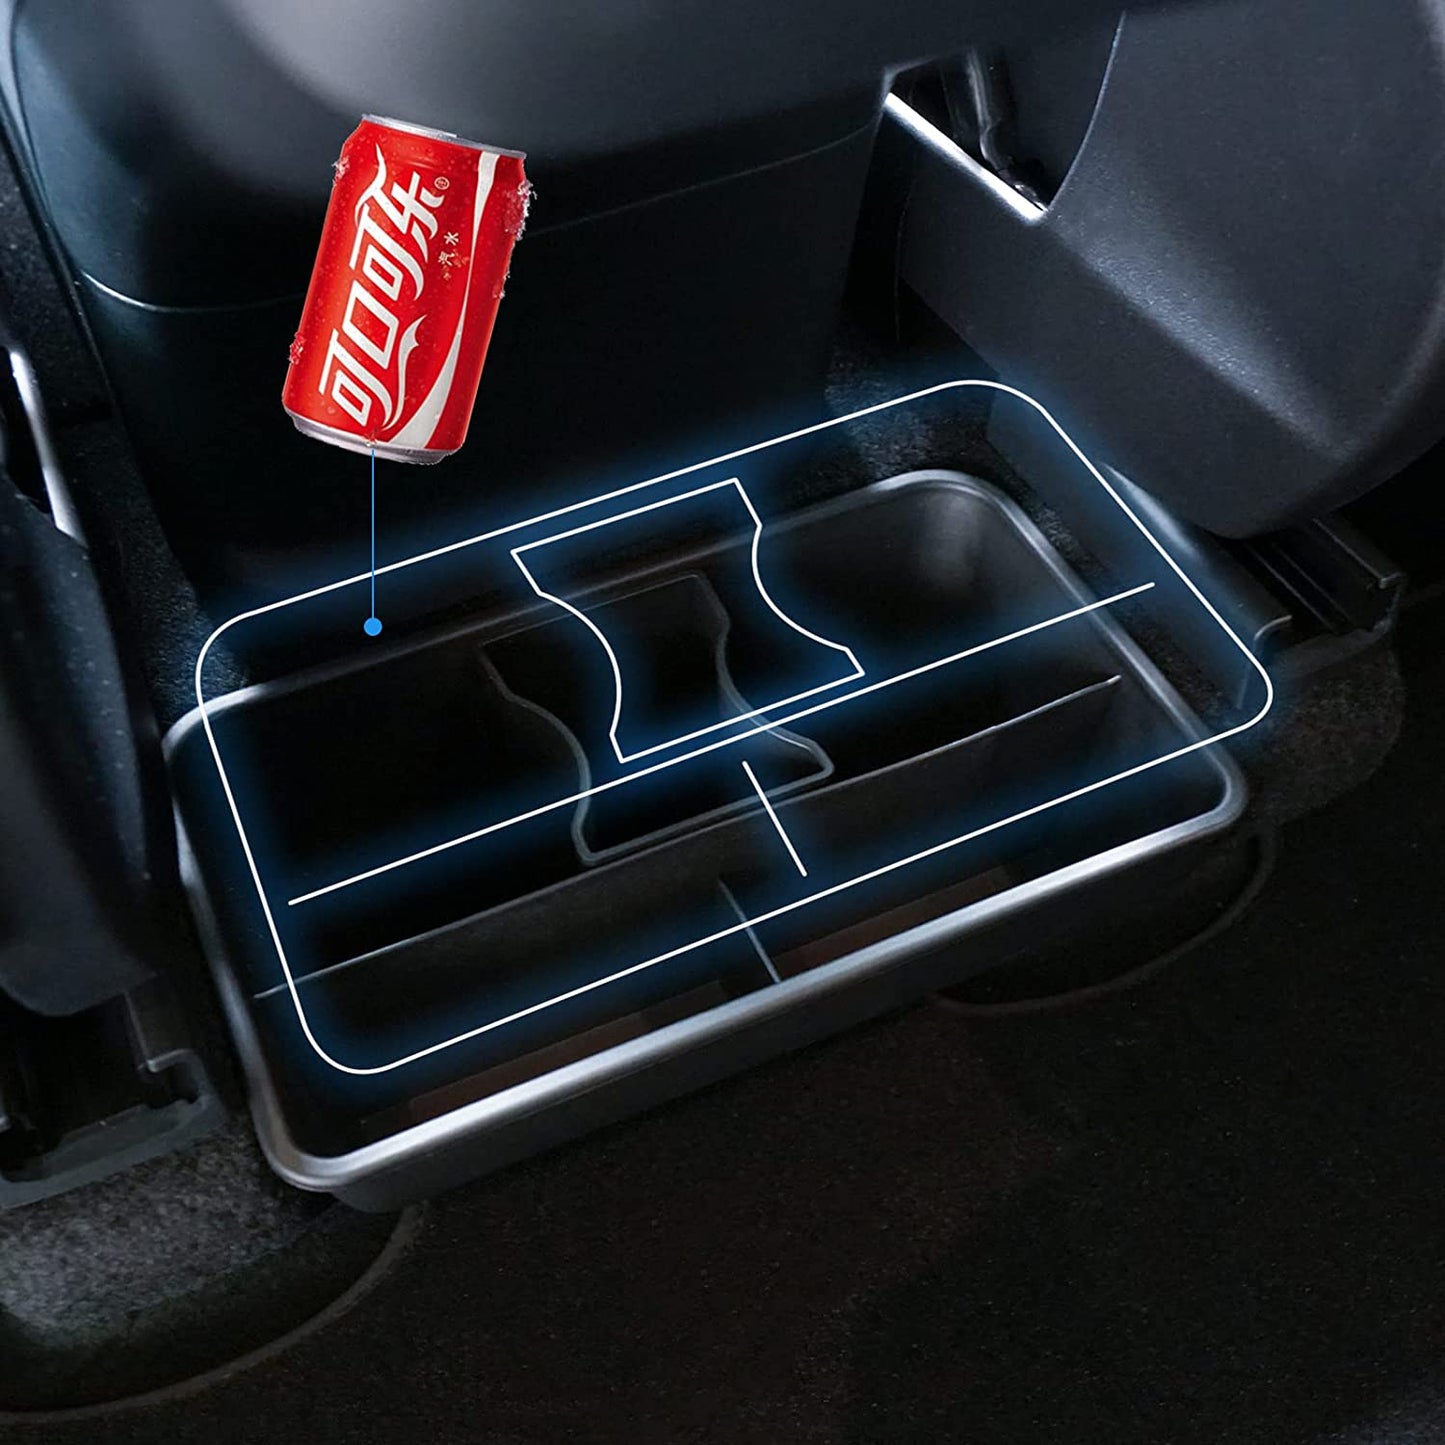 Tesla Model Y Rear Center Console Organizer Back Seat Storage Box